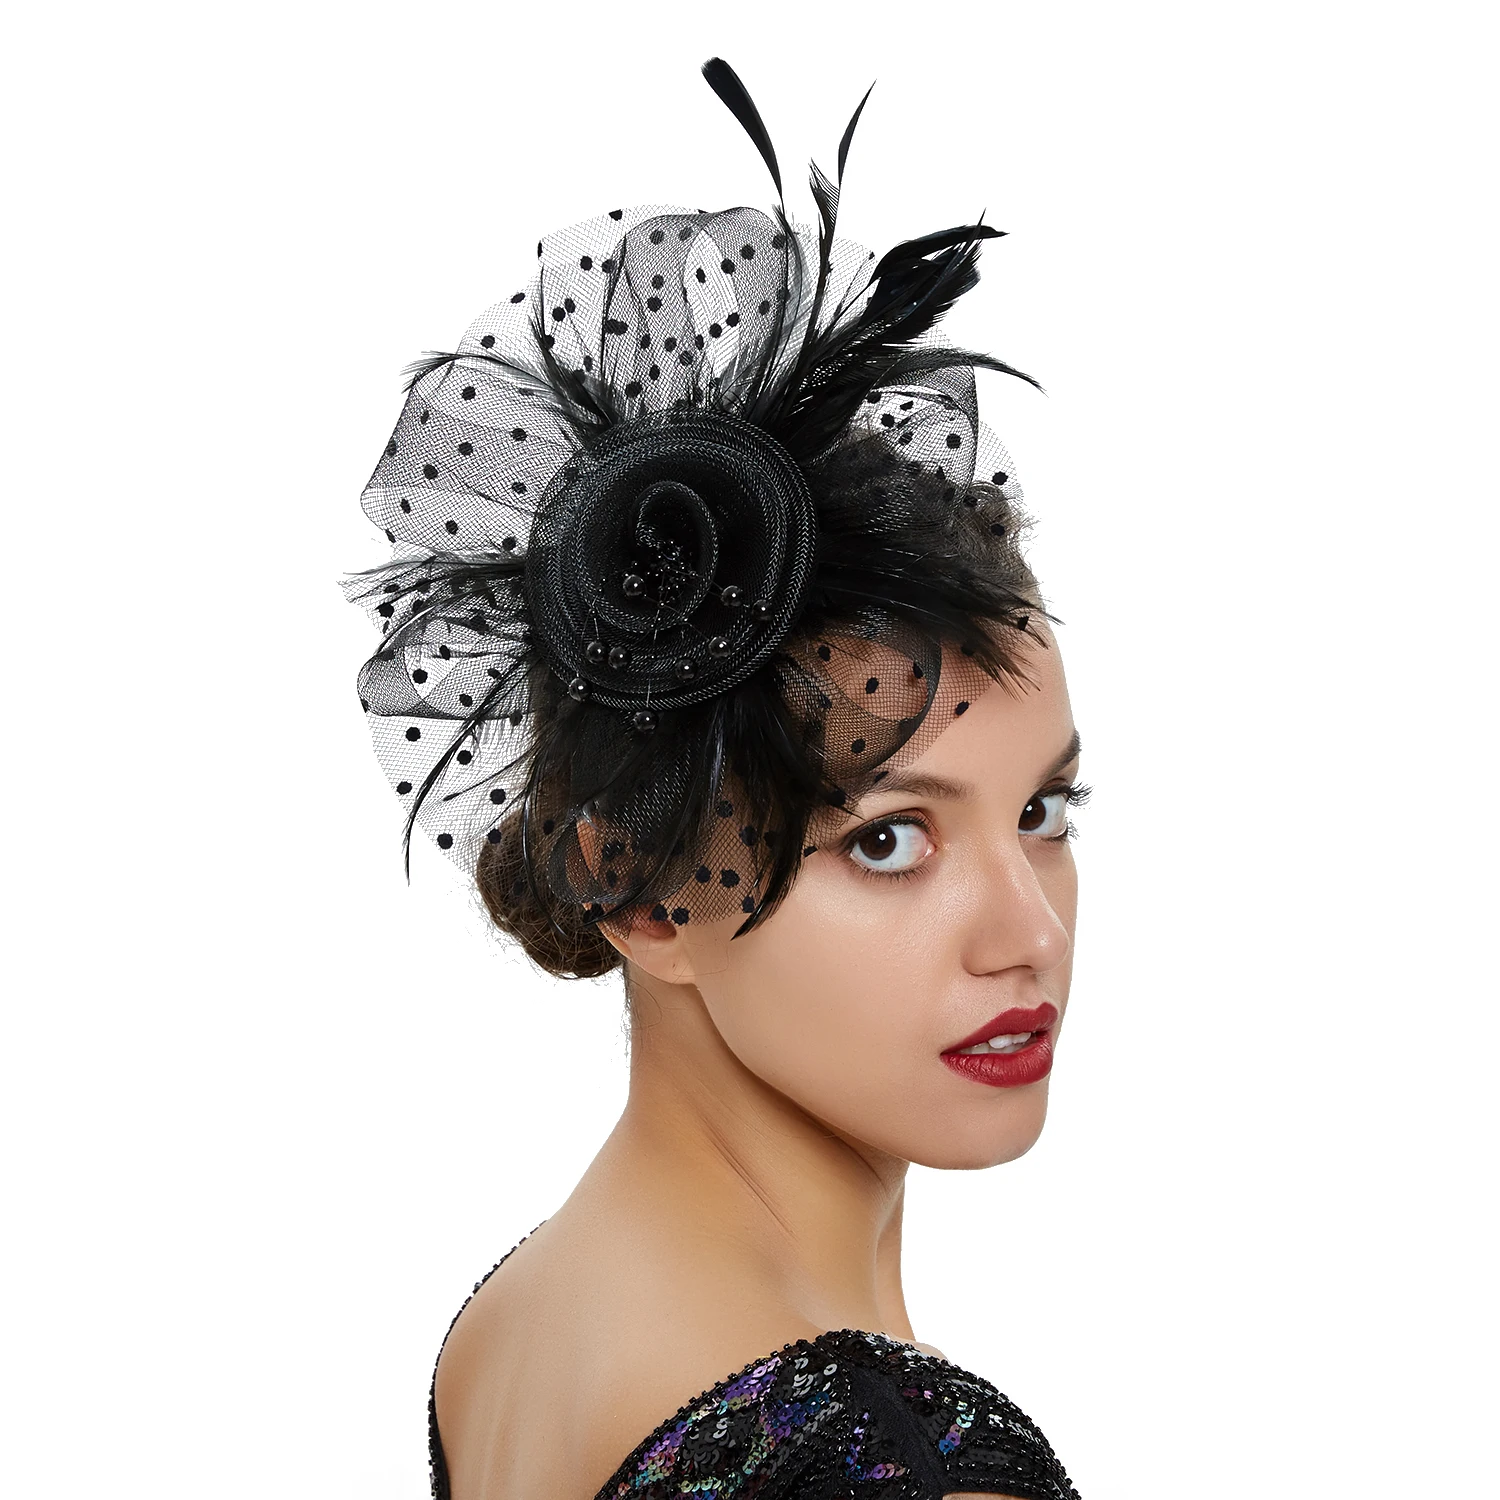 Vintage Women Feather Flower Fascinator Hat Ladies Hair Accessories Wedding Party Floral Mesh Veil Headband Hairpin 1